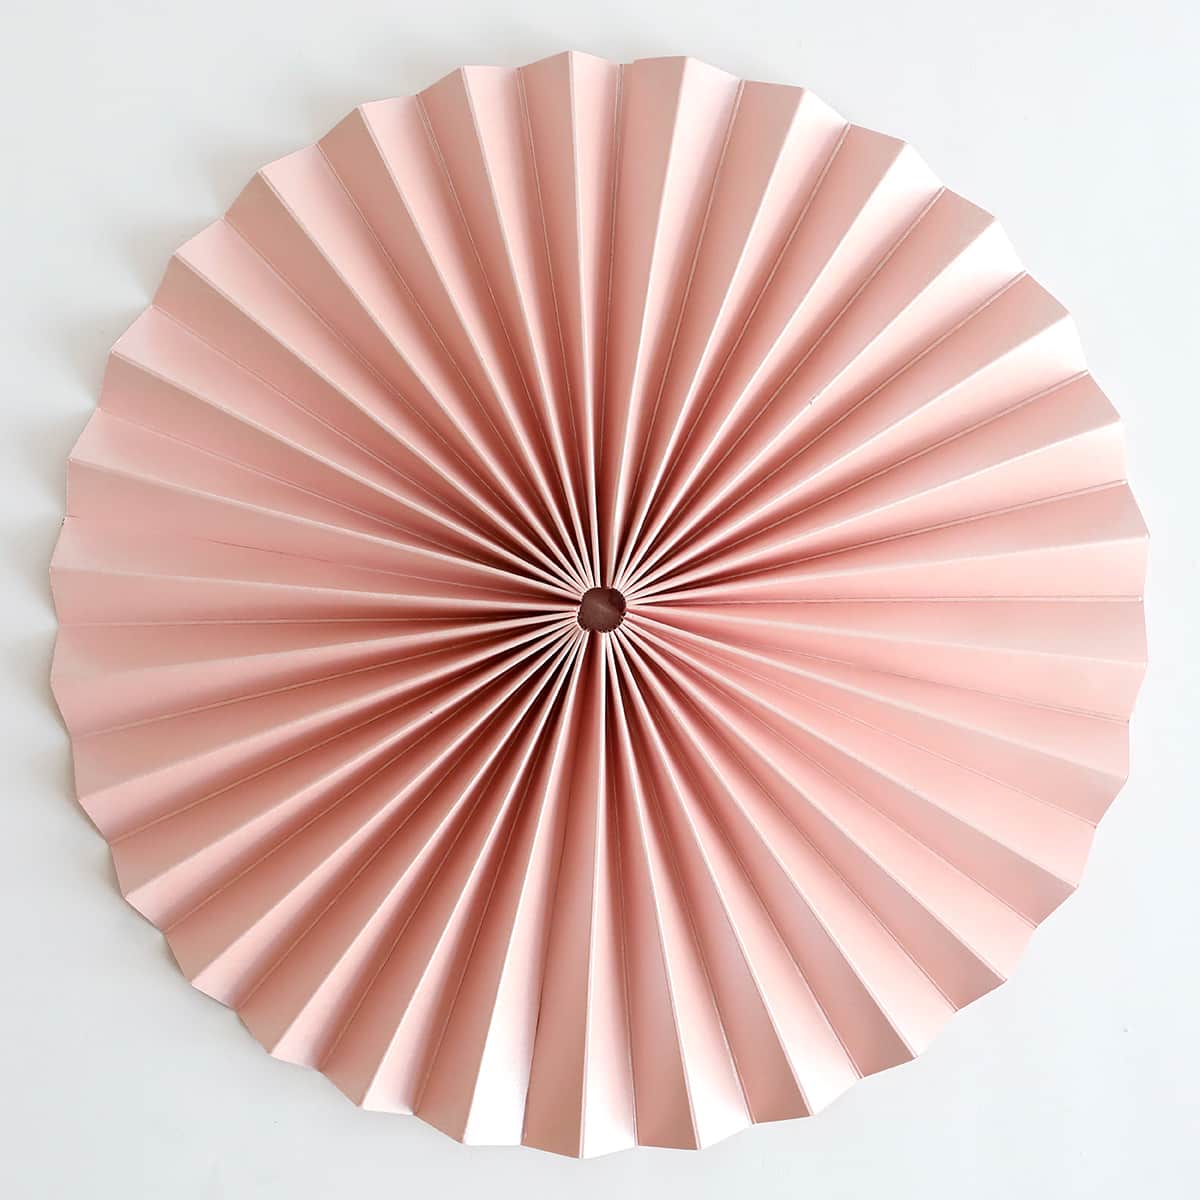 a pink paper fan on a white wall.